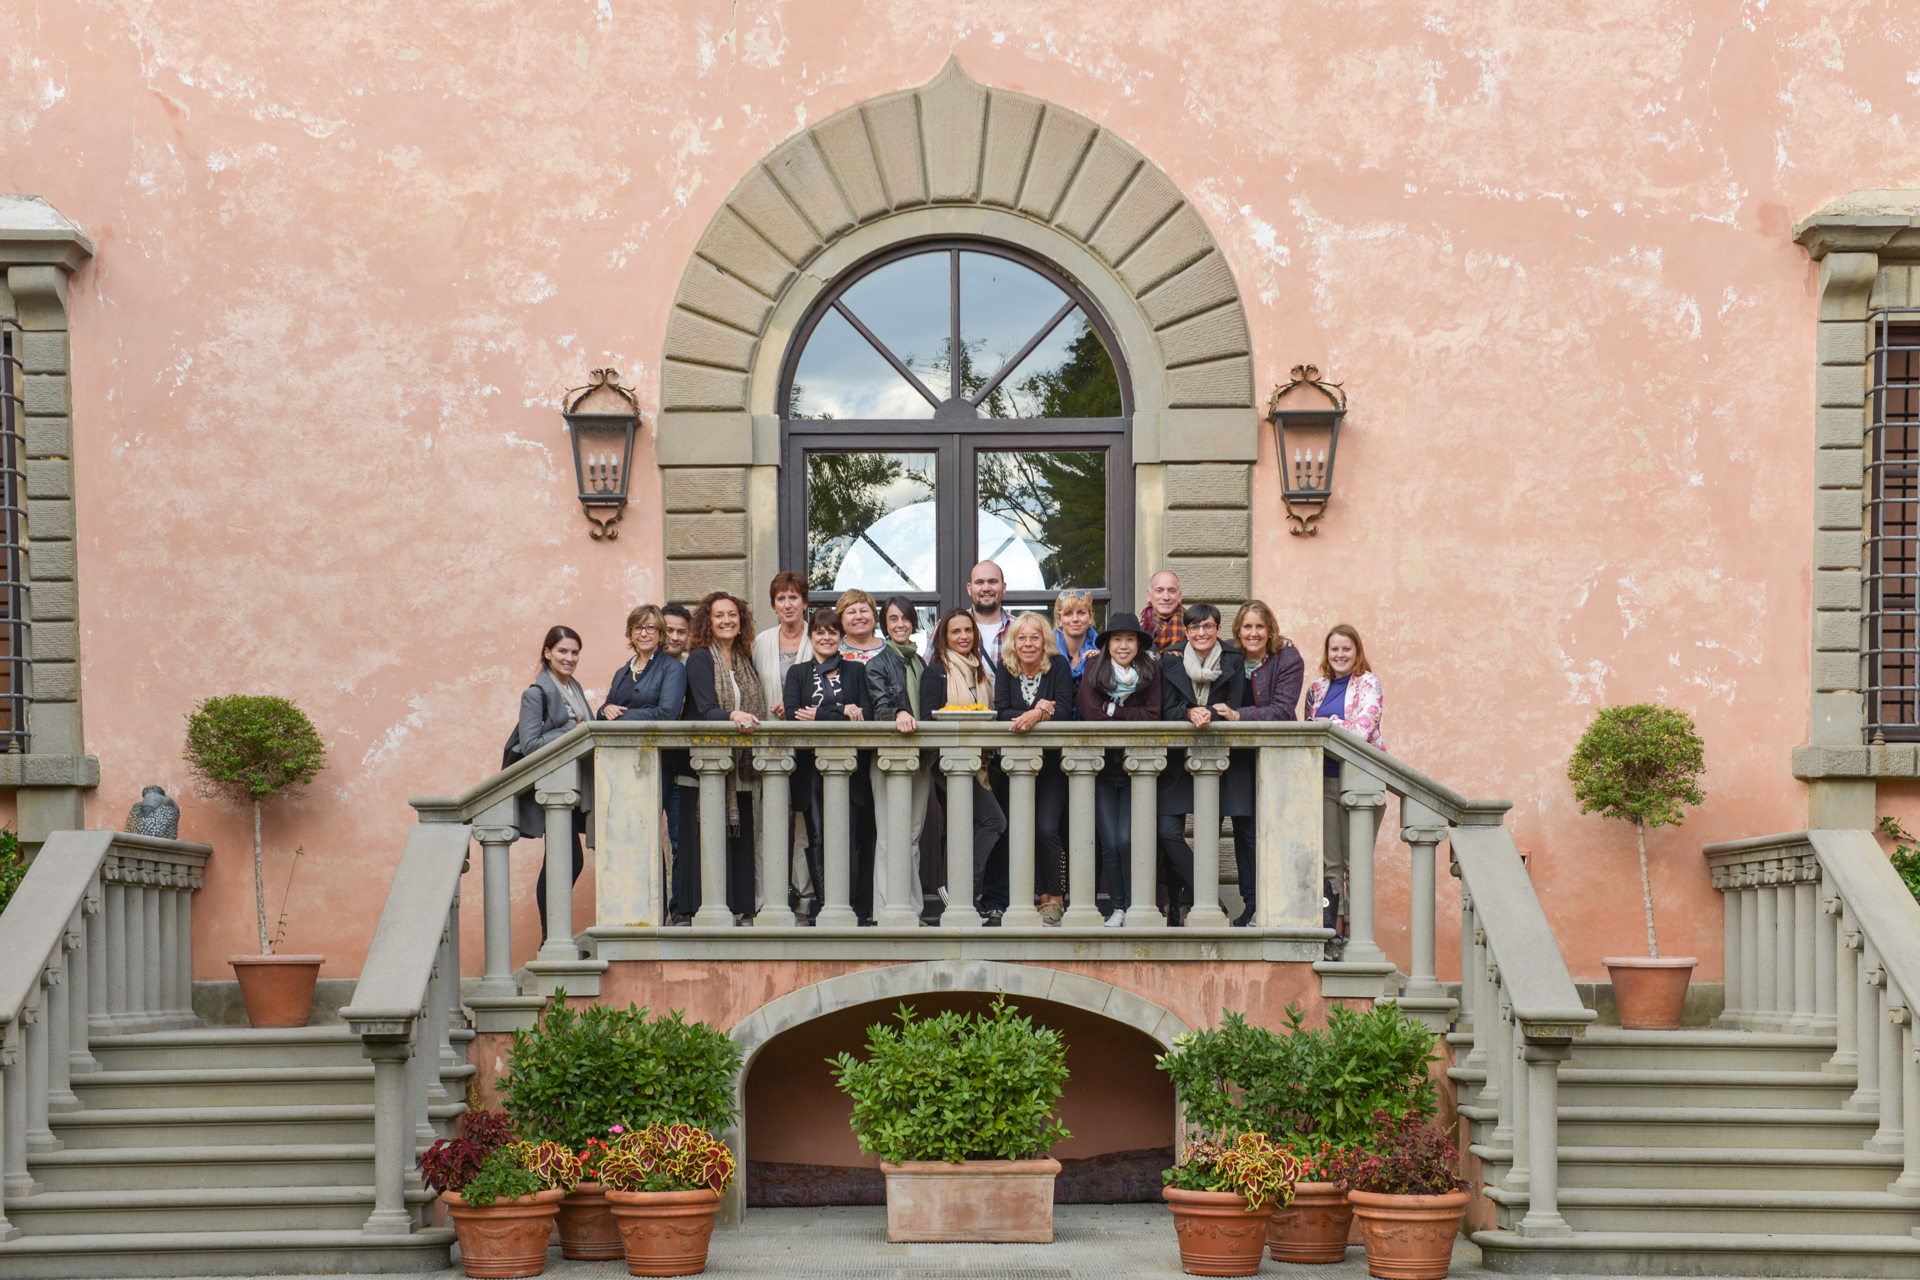 Firenze ospita alcuni tra i top destination wedding planner del mondo (Fonte Foto Firenze Convention Bureau)